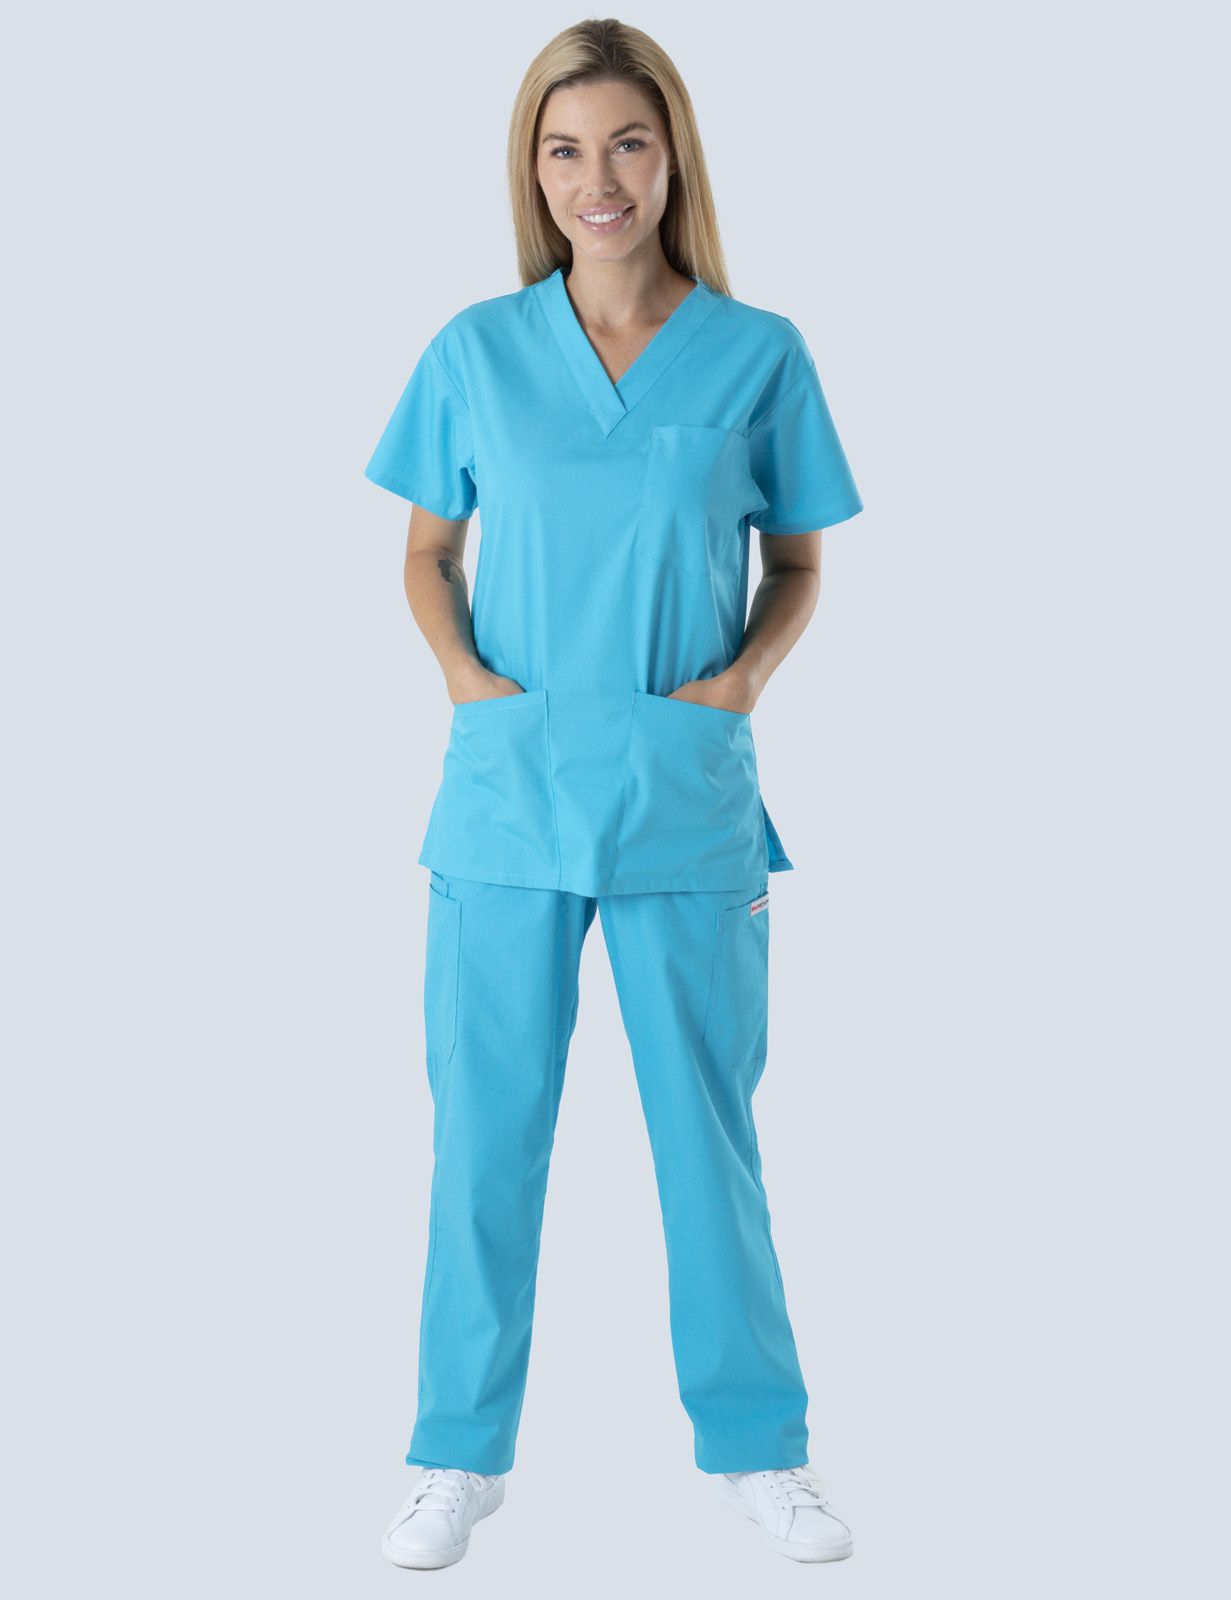 Maleny Hospital - Enrolled Nurse (4 Pocket Scrub Top and Cargo Pants in Aqua incl Logos)